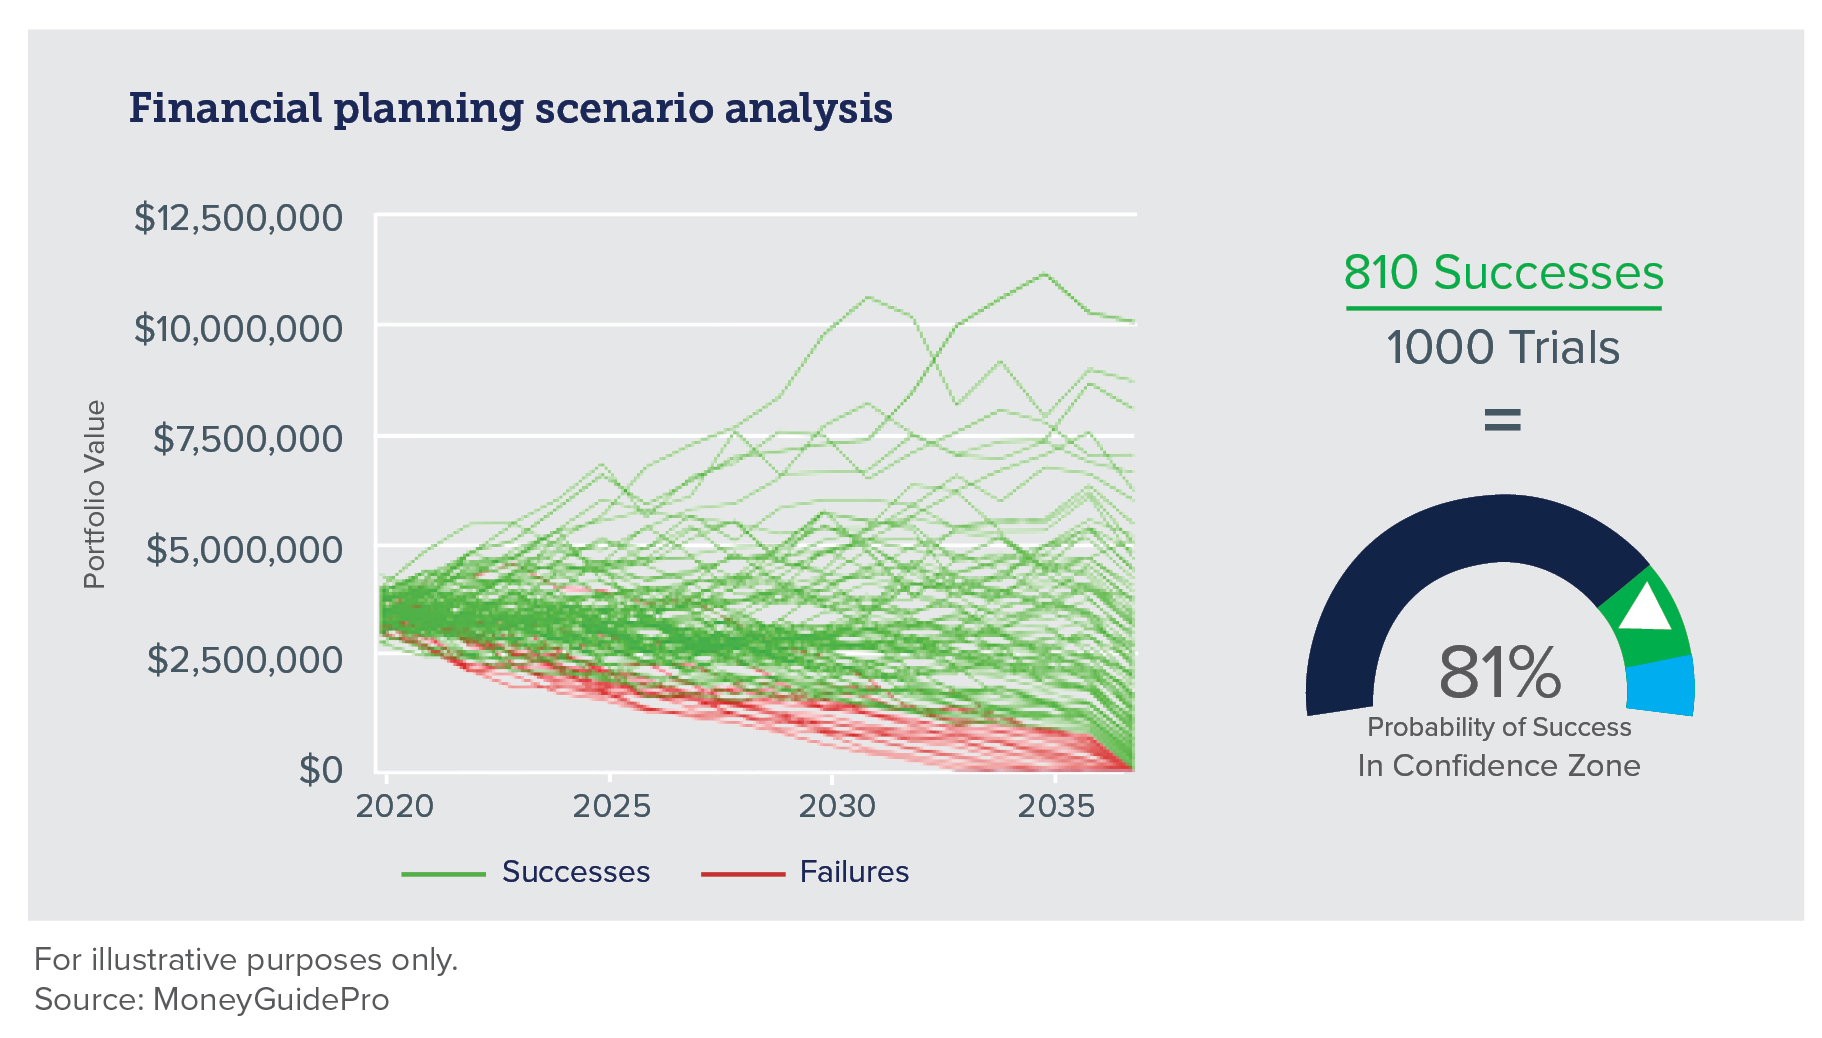 Financial planning scenario analysis through 2035